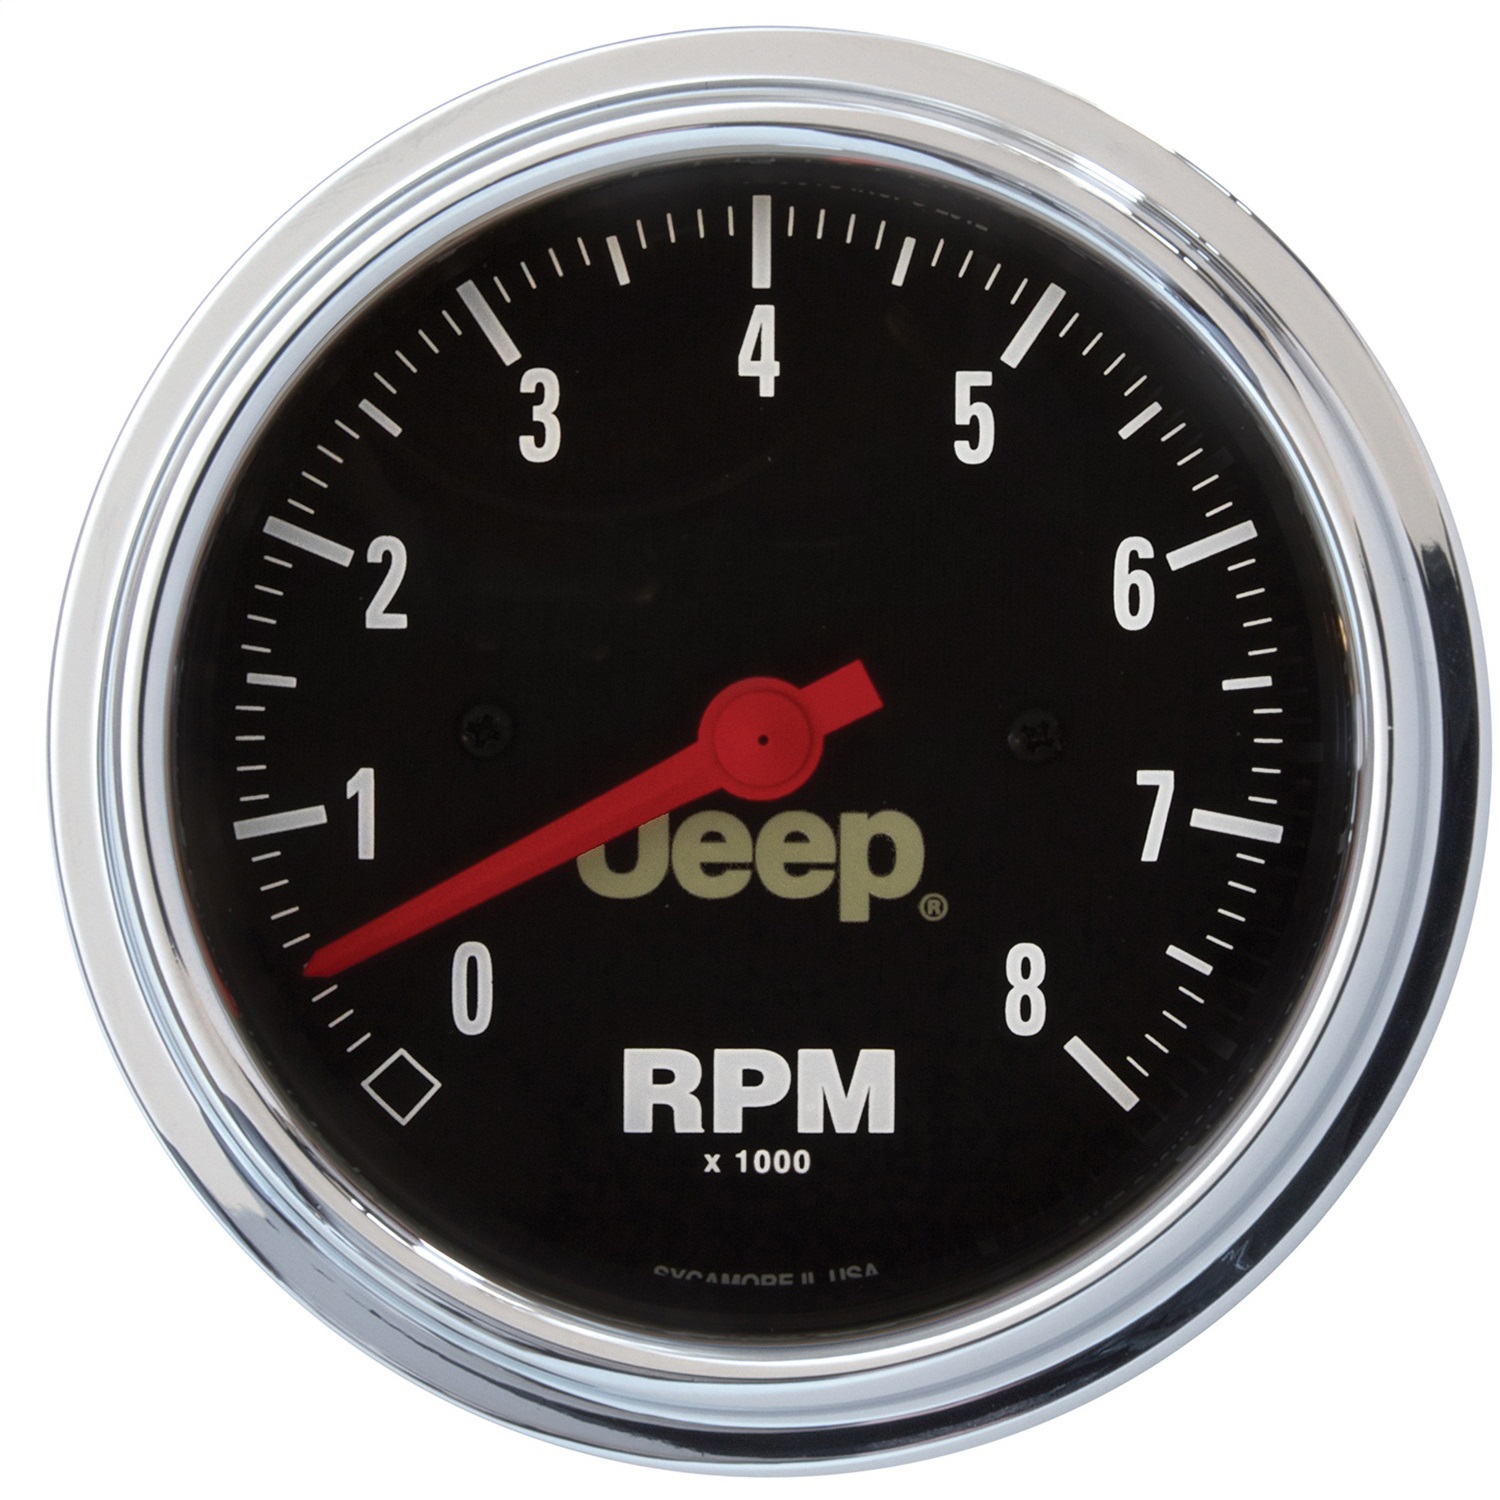 Auto Meter Auto Meter 880246 Jeep; Tachometer